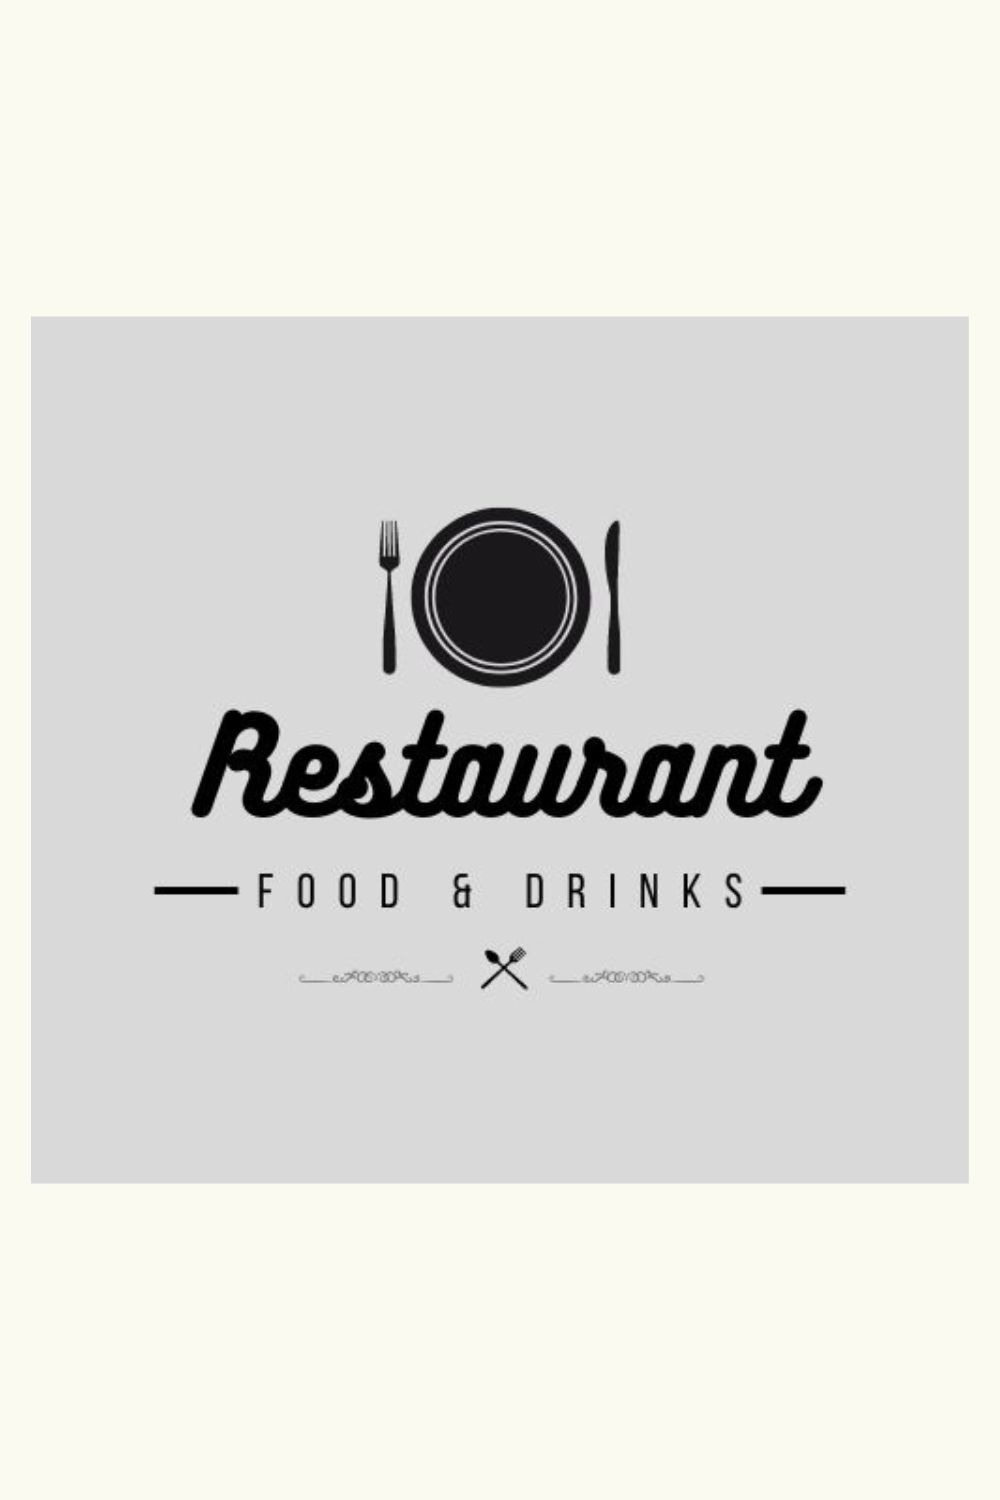 Customizable Restaurant Logo Templates pinterest preview image.